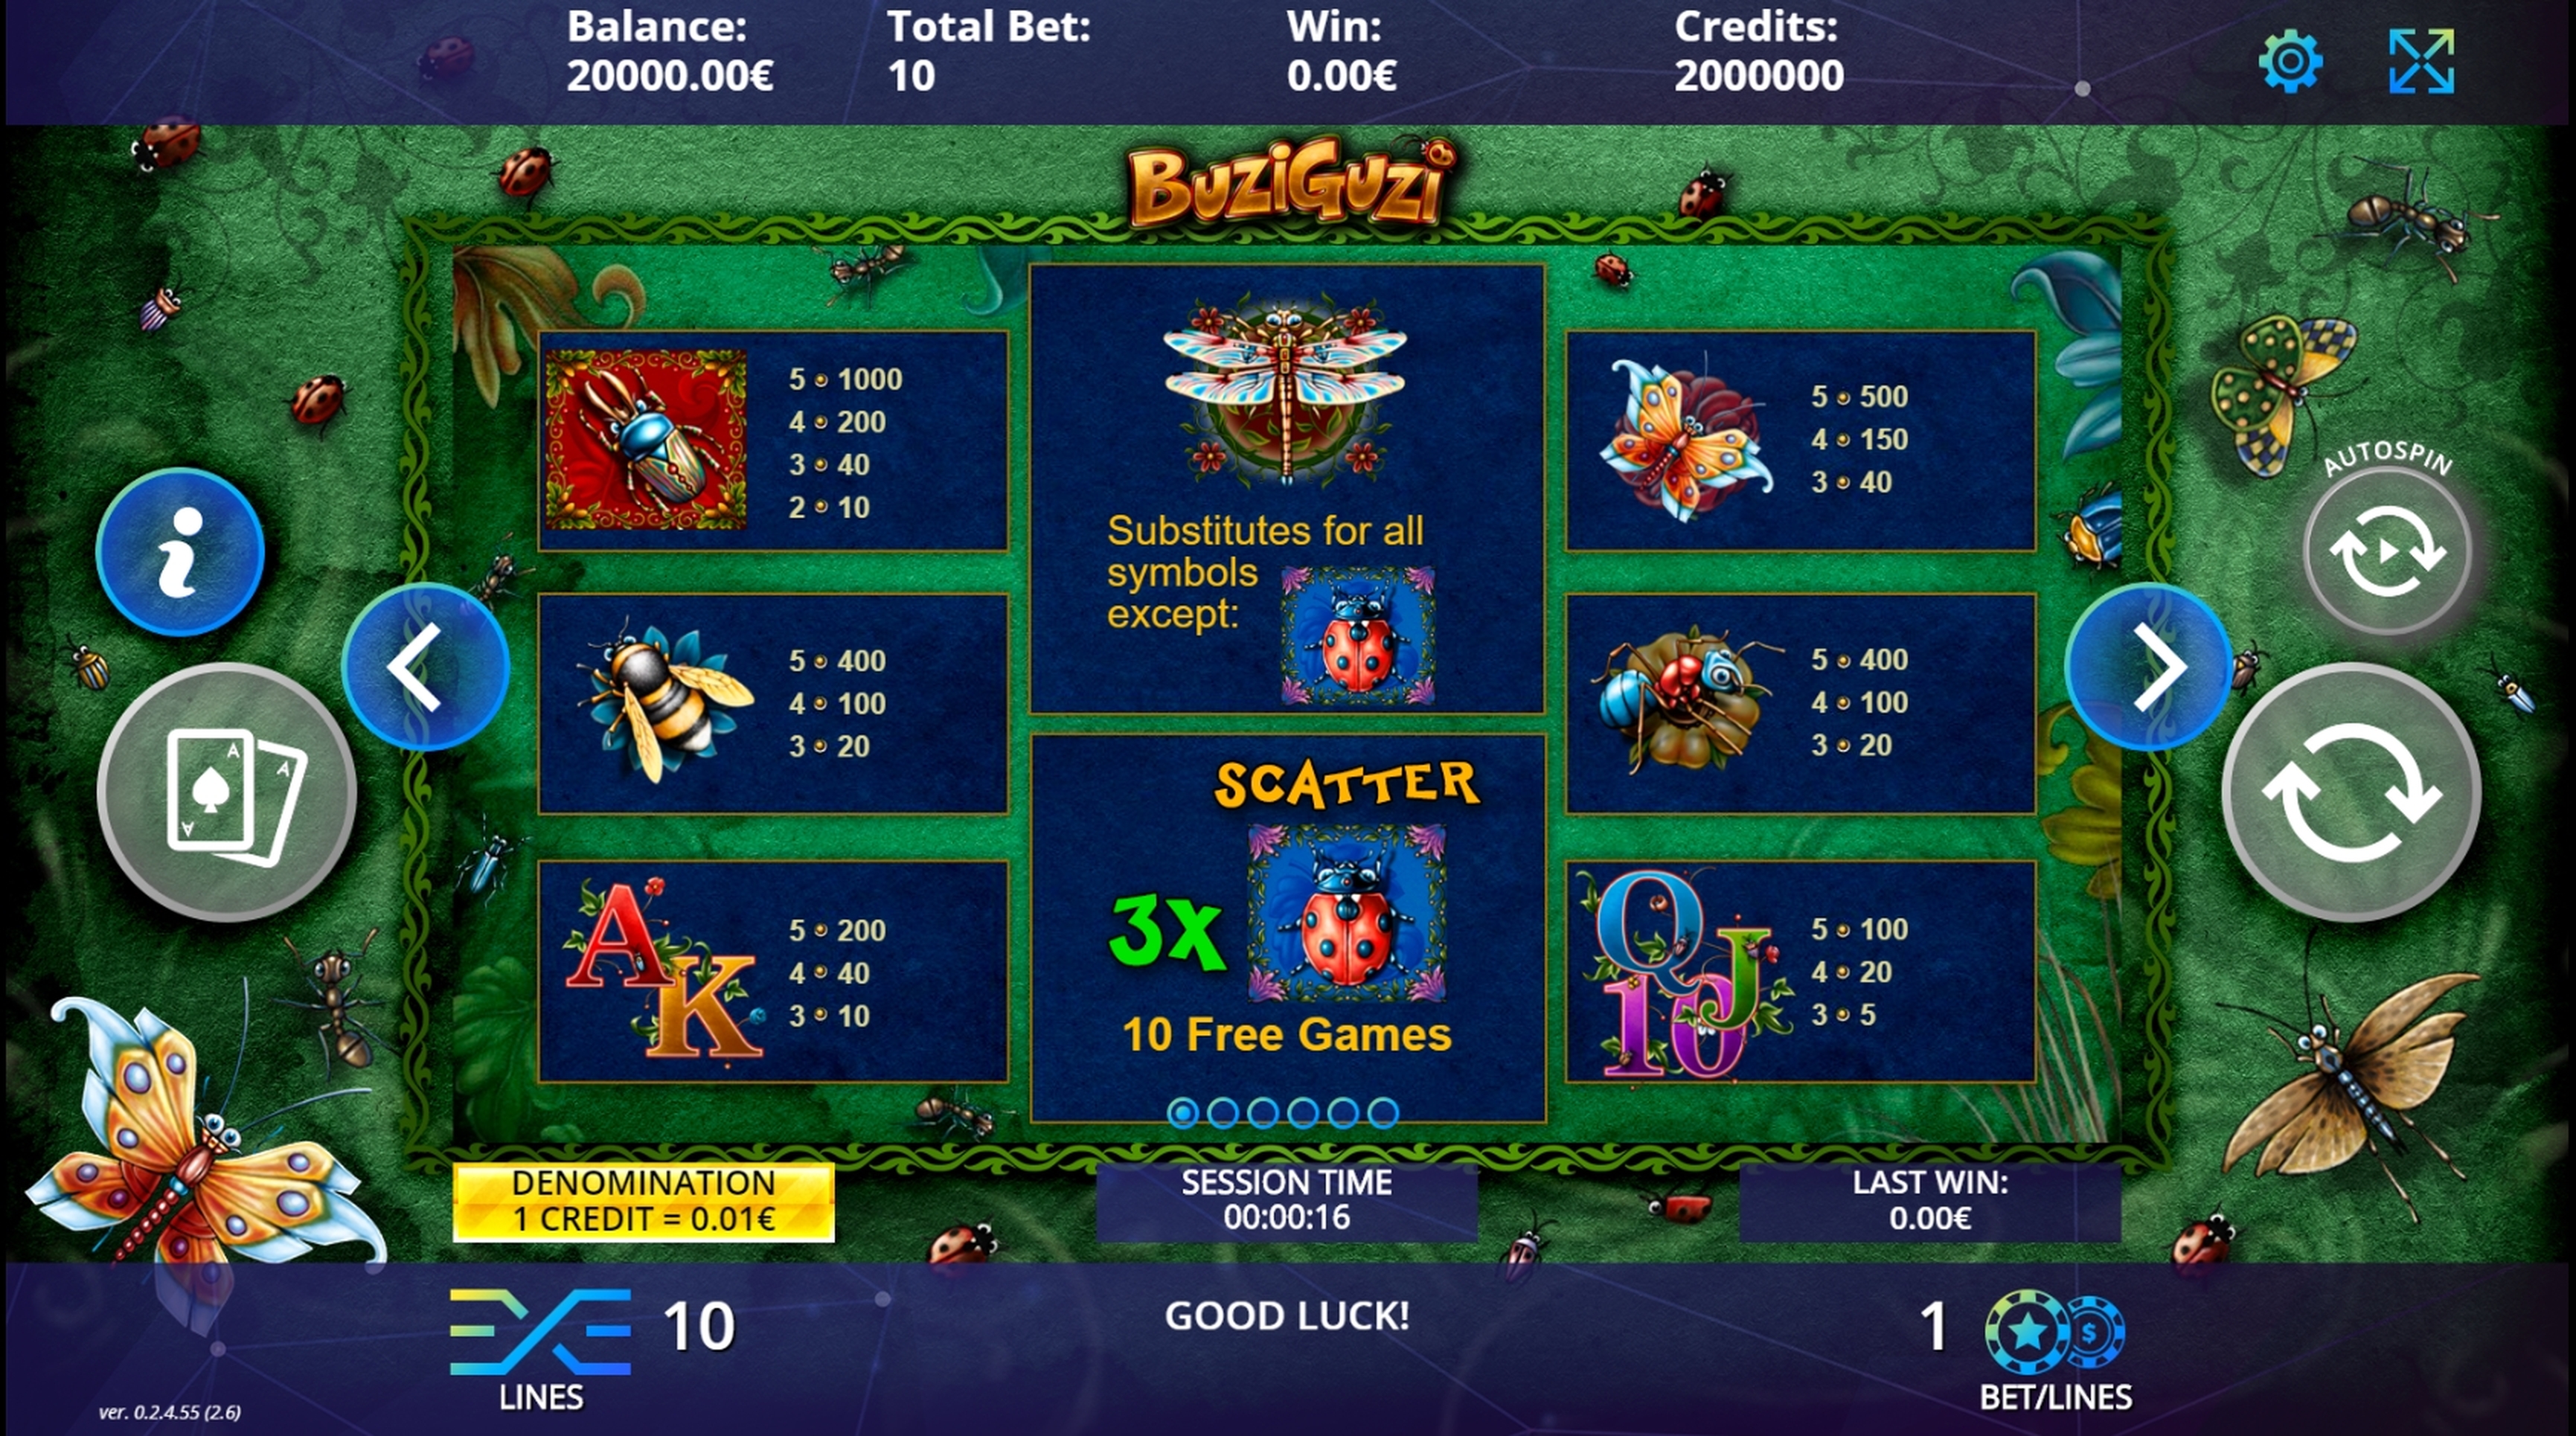 Info of BuziGuzi Slot Game by DLV